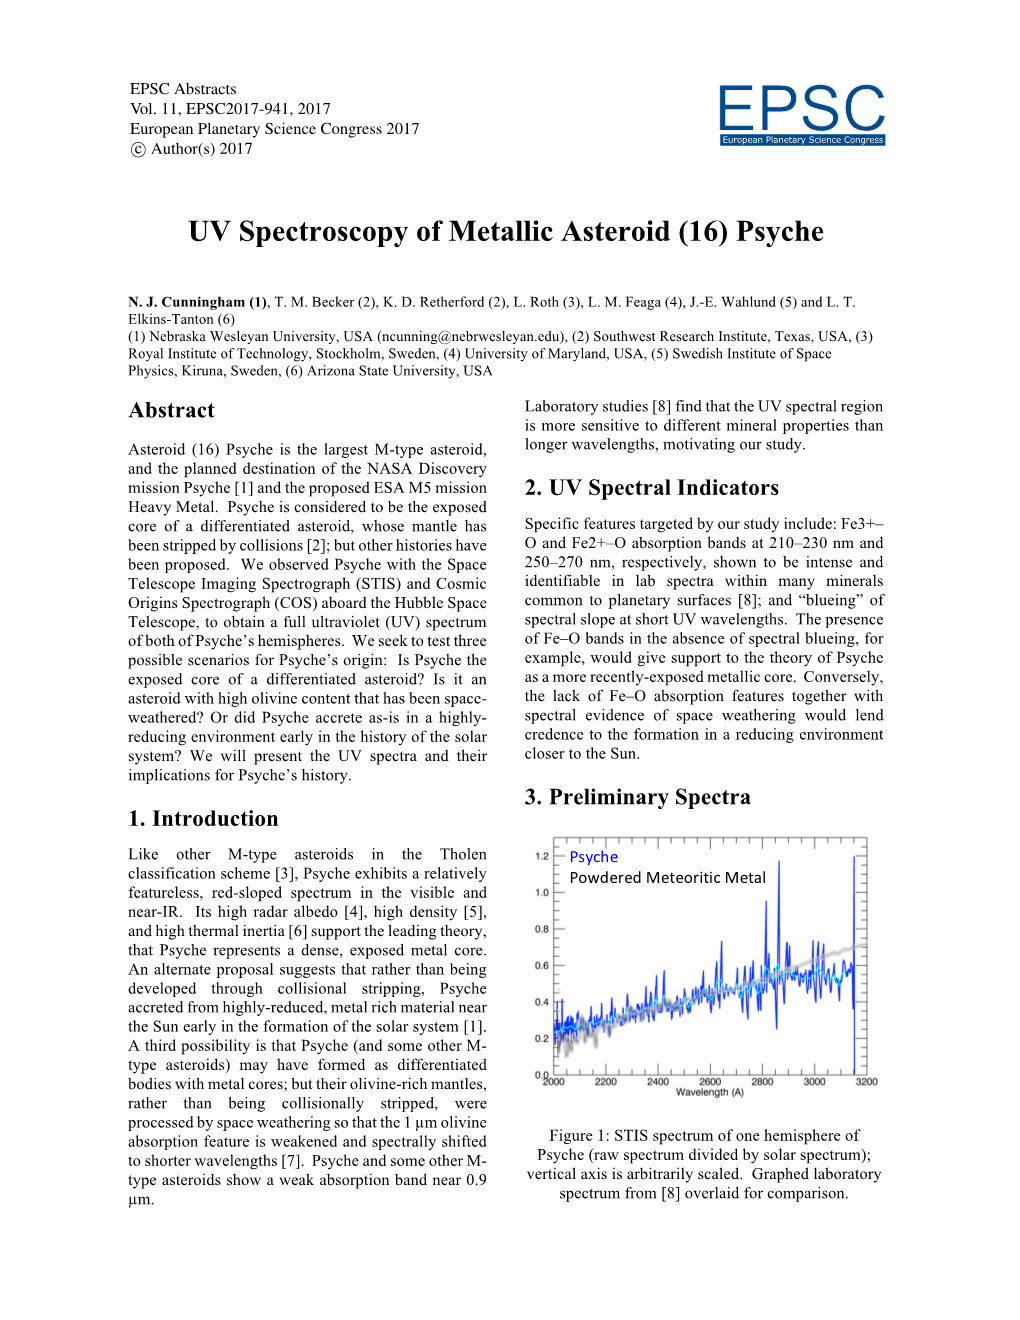 UV Spectroscopy of Metallic Asteroid (16) Psyche